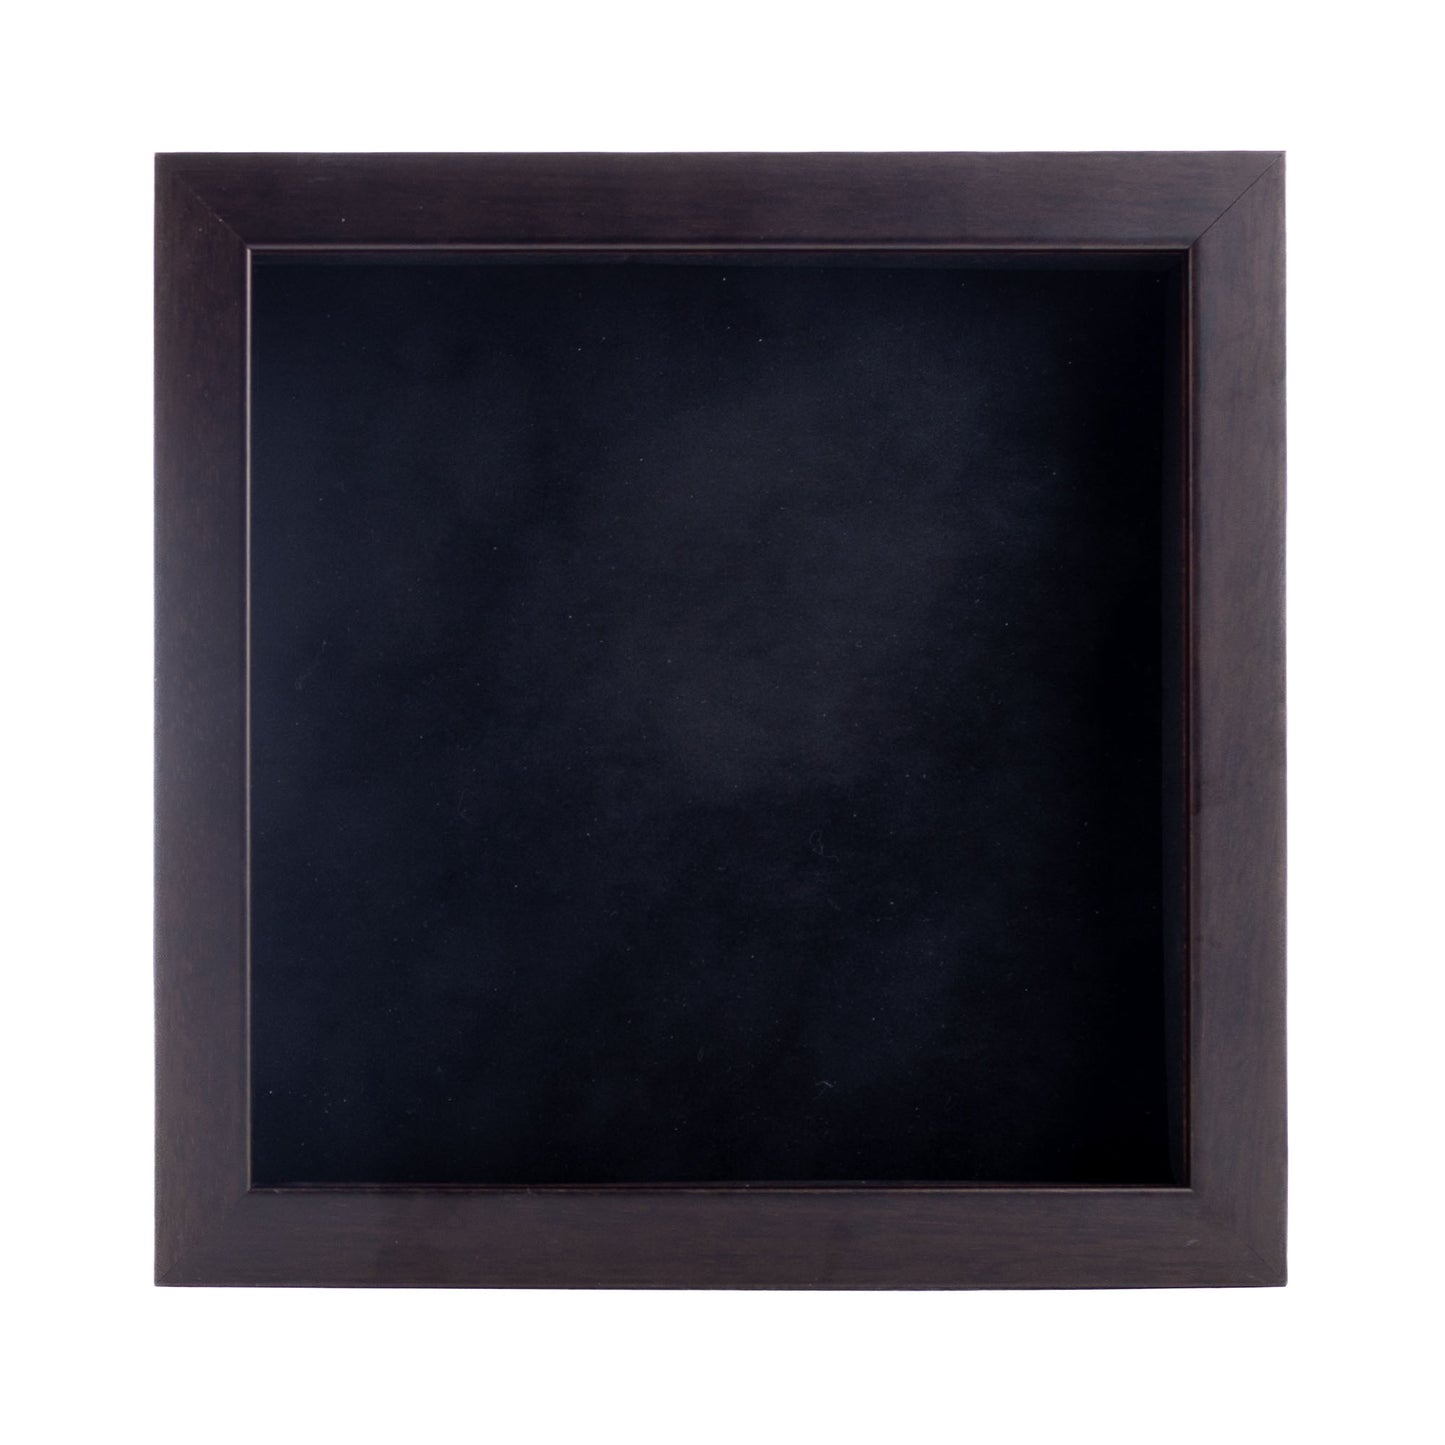 Walnut Shadow Box Frame With Black Acid-Free Suede Backing